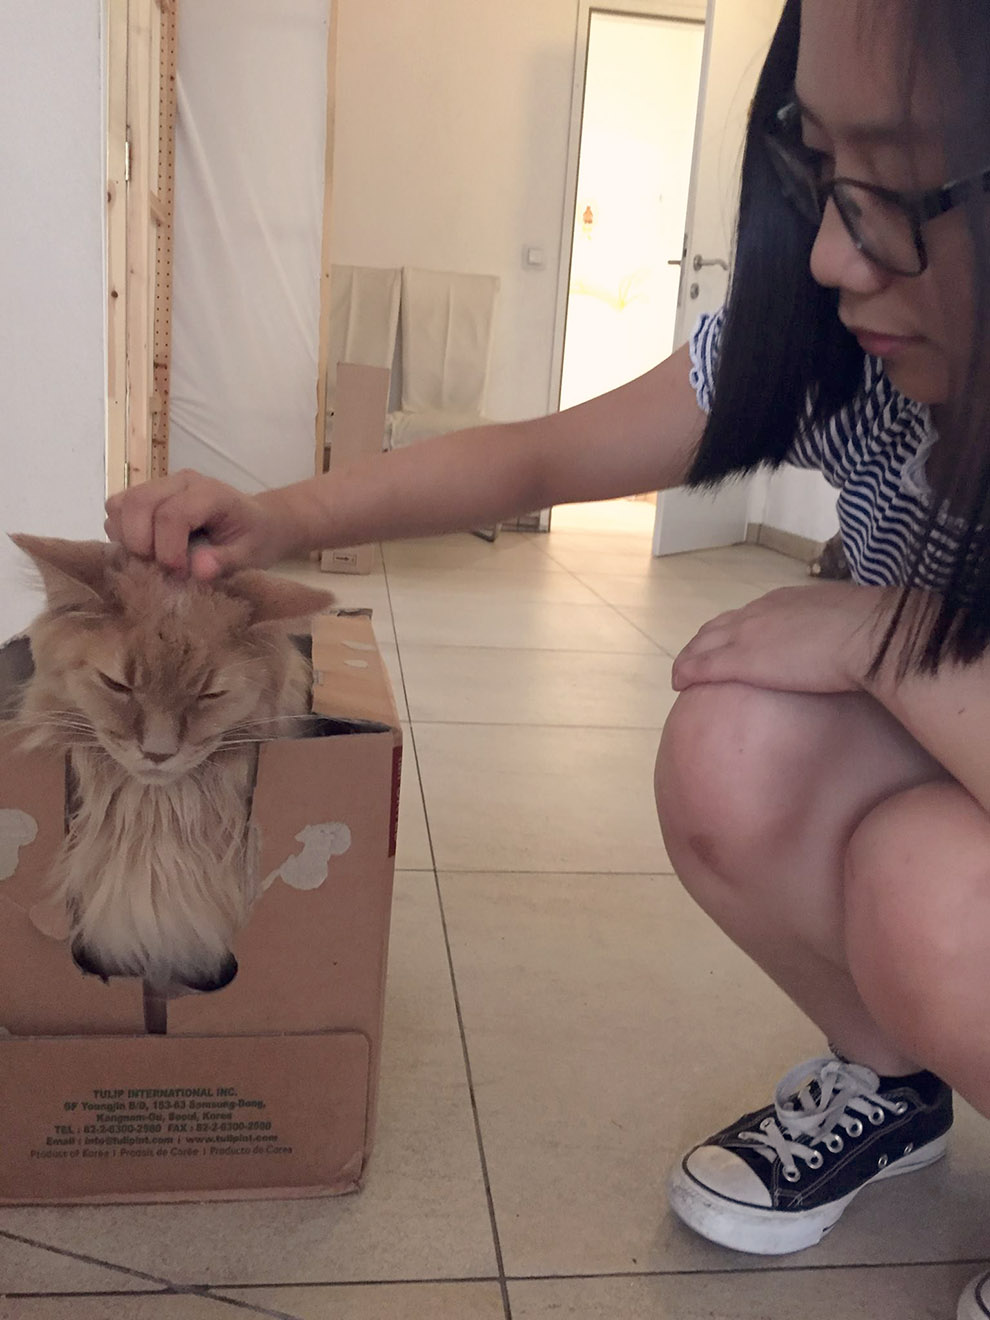 For The Love of Cats – Visiting Neko Café